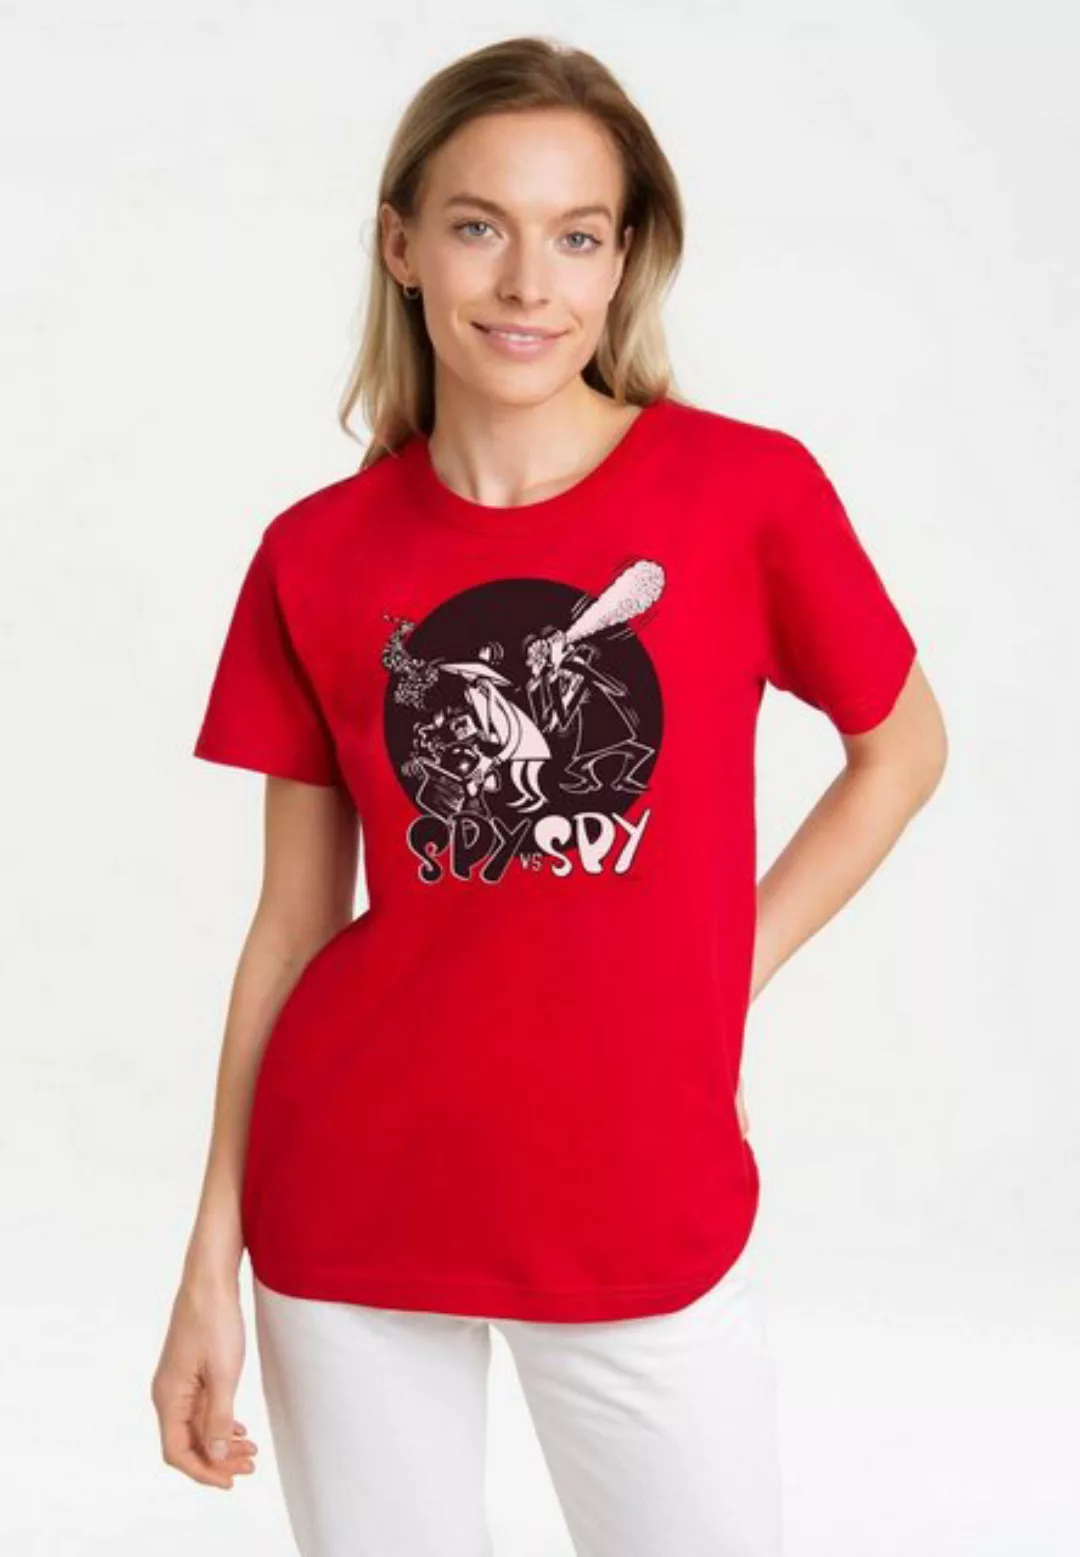 LOGOSHIRT T-Shirt Mad - Spy vs Spy mit coolem Print günstig online kaufen